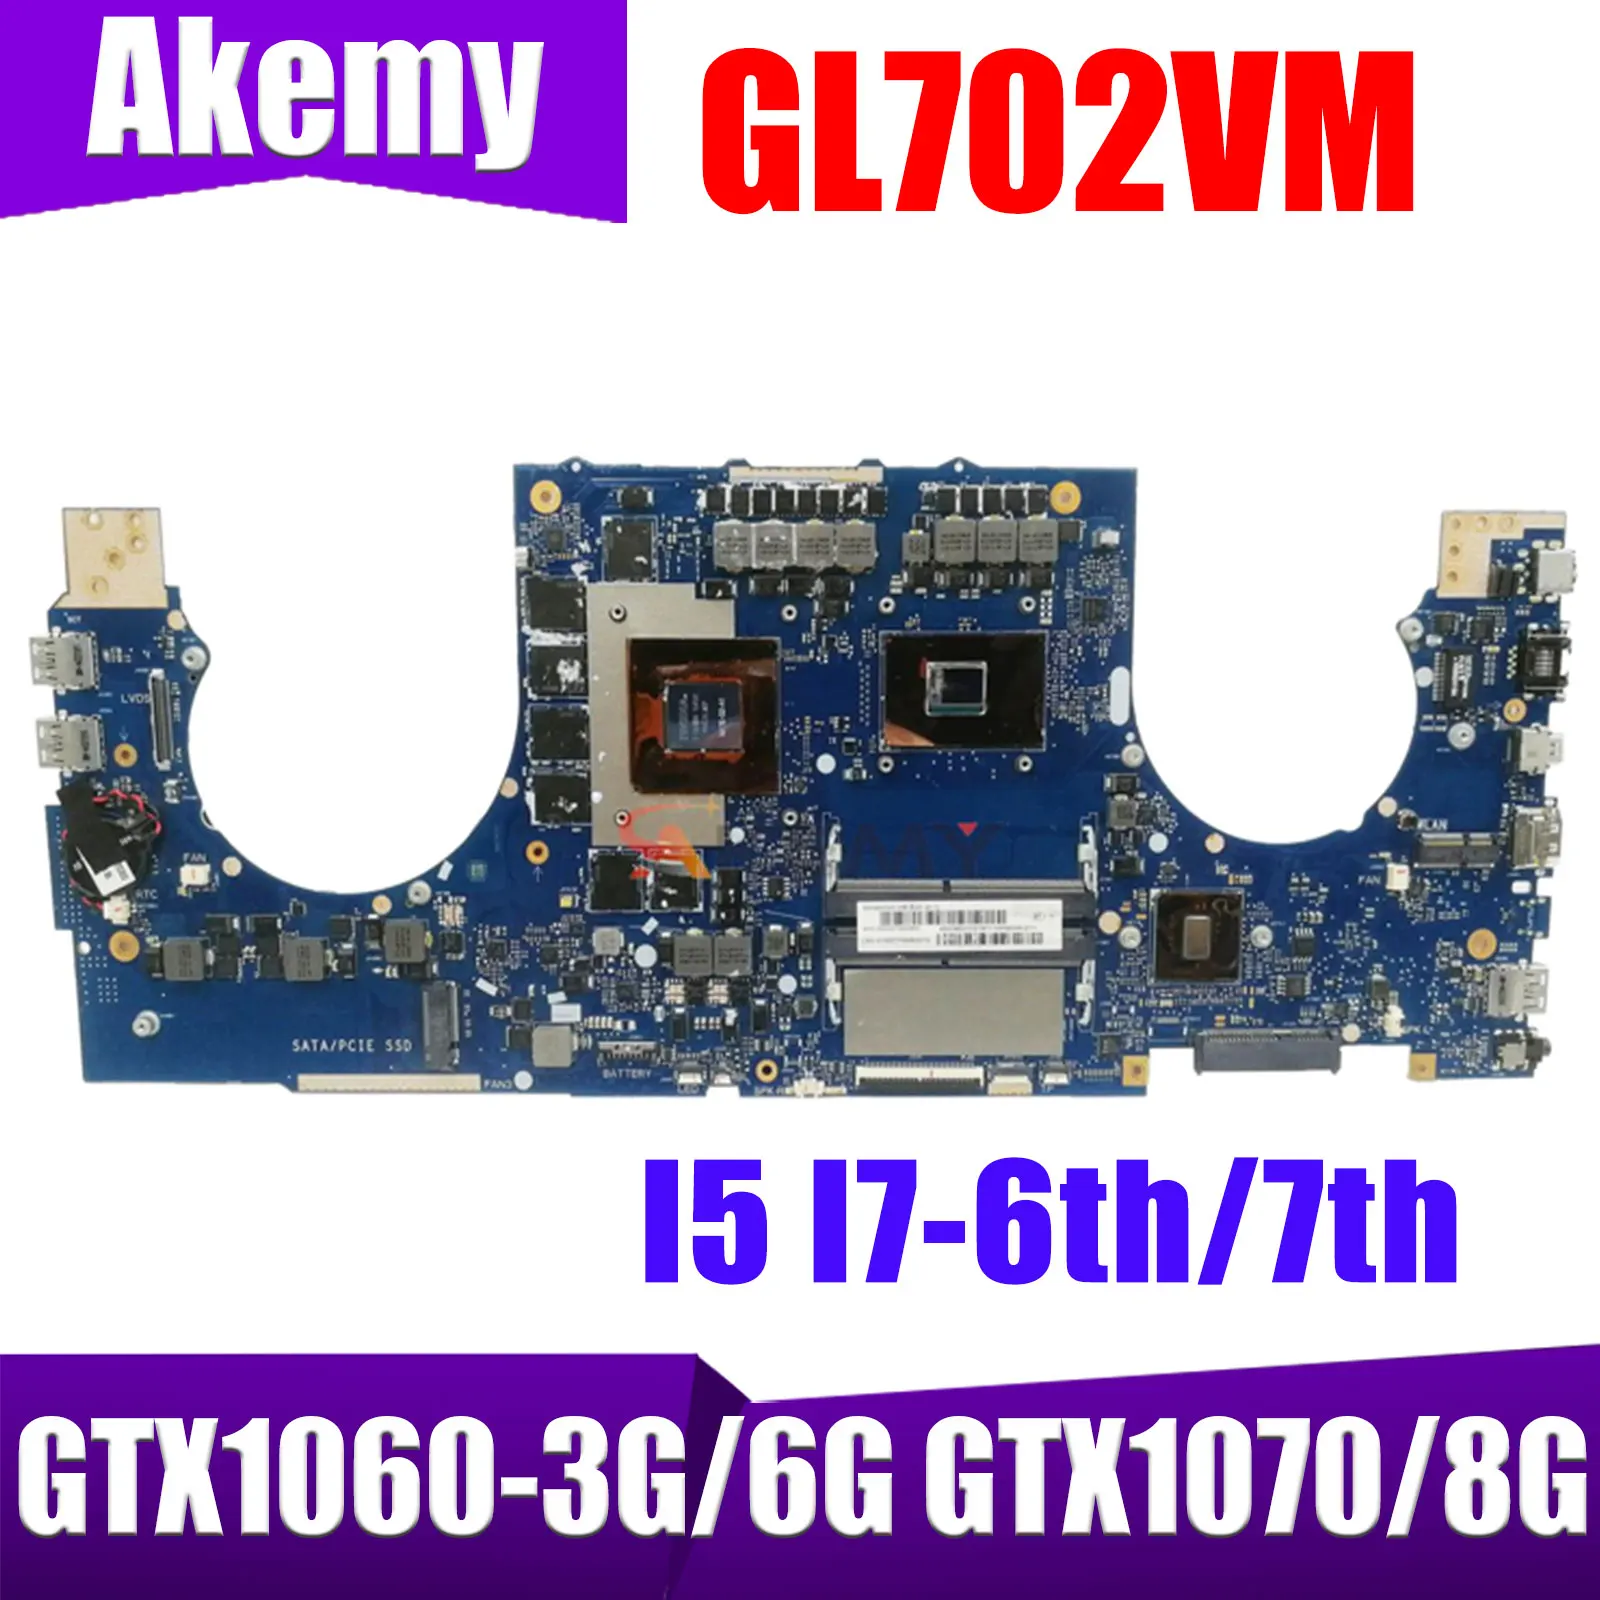 

GL702VM Mainboard For ASUS FX70V GL702VMK GL702VSK GL702VS GL702VML Laptop Motherboard I5 I7-6th/7th GTX1060-3G/6G GTX1070/8G